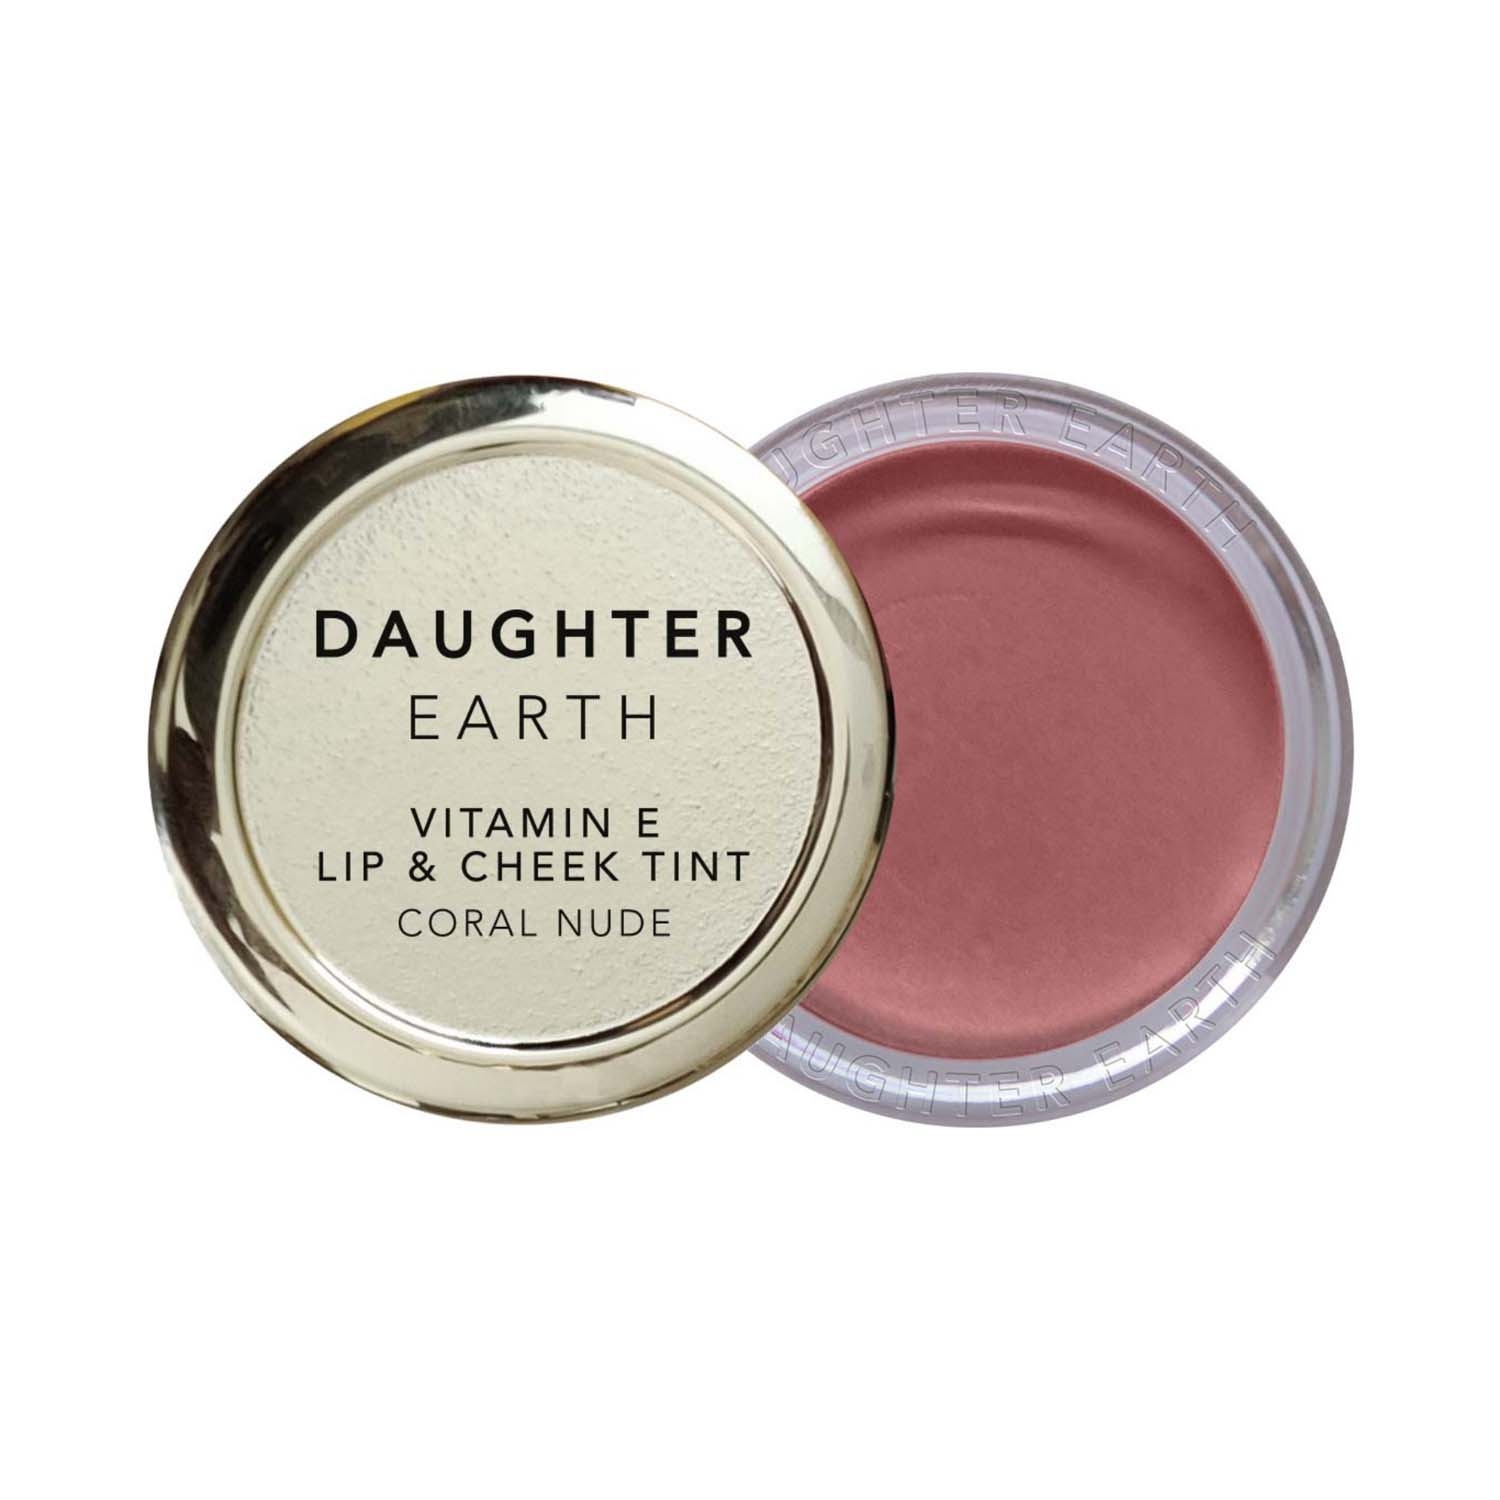  | DAUGHTER EARTH Vitamin E Lip & Cheek Tint - Coral Nude (4.5g)